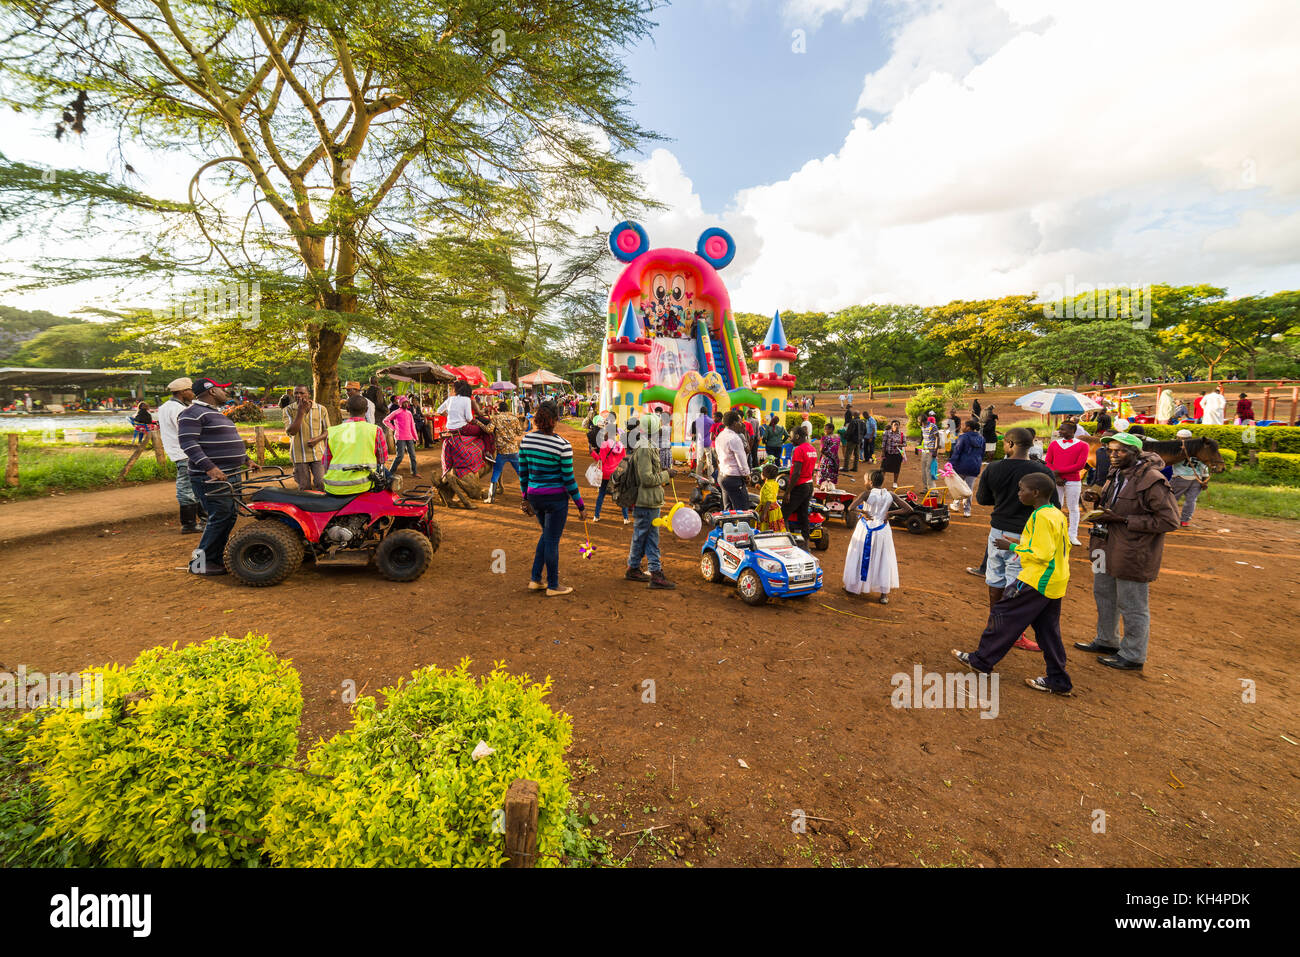 Fairground area with childrens rides in Uhuru Park, Nairobi, Kenya Stock Photo